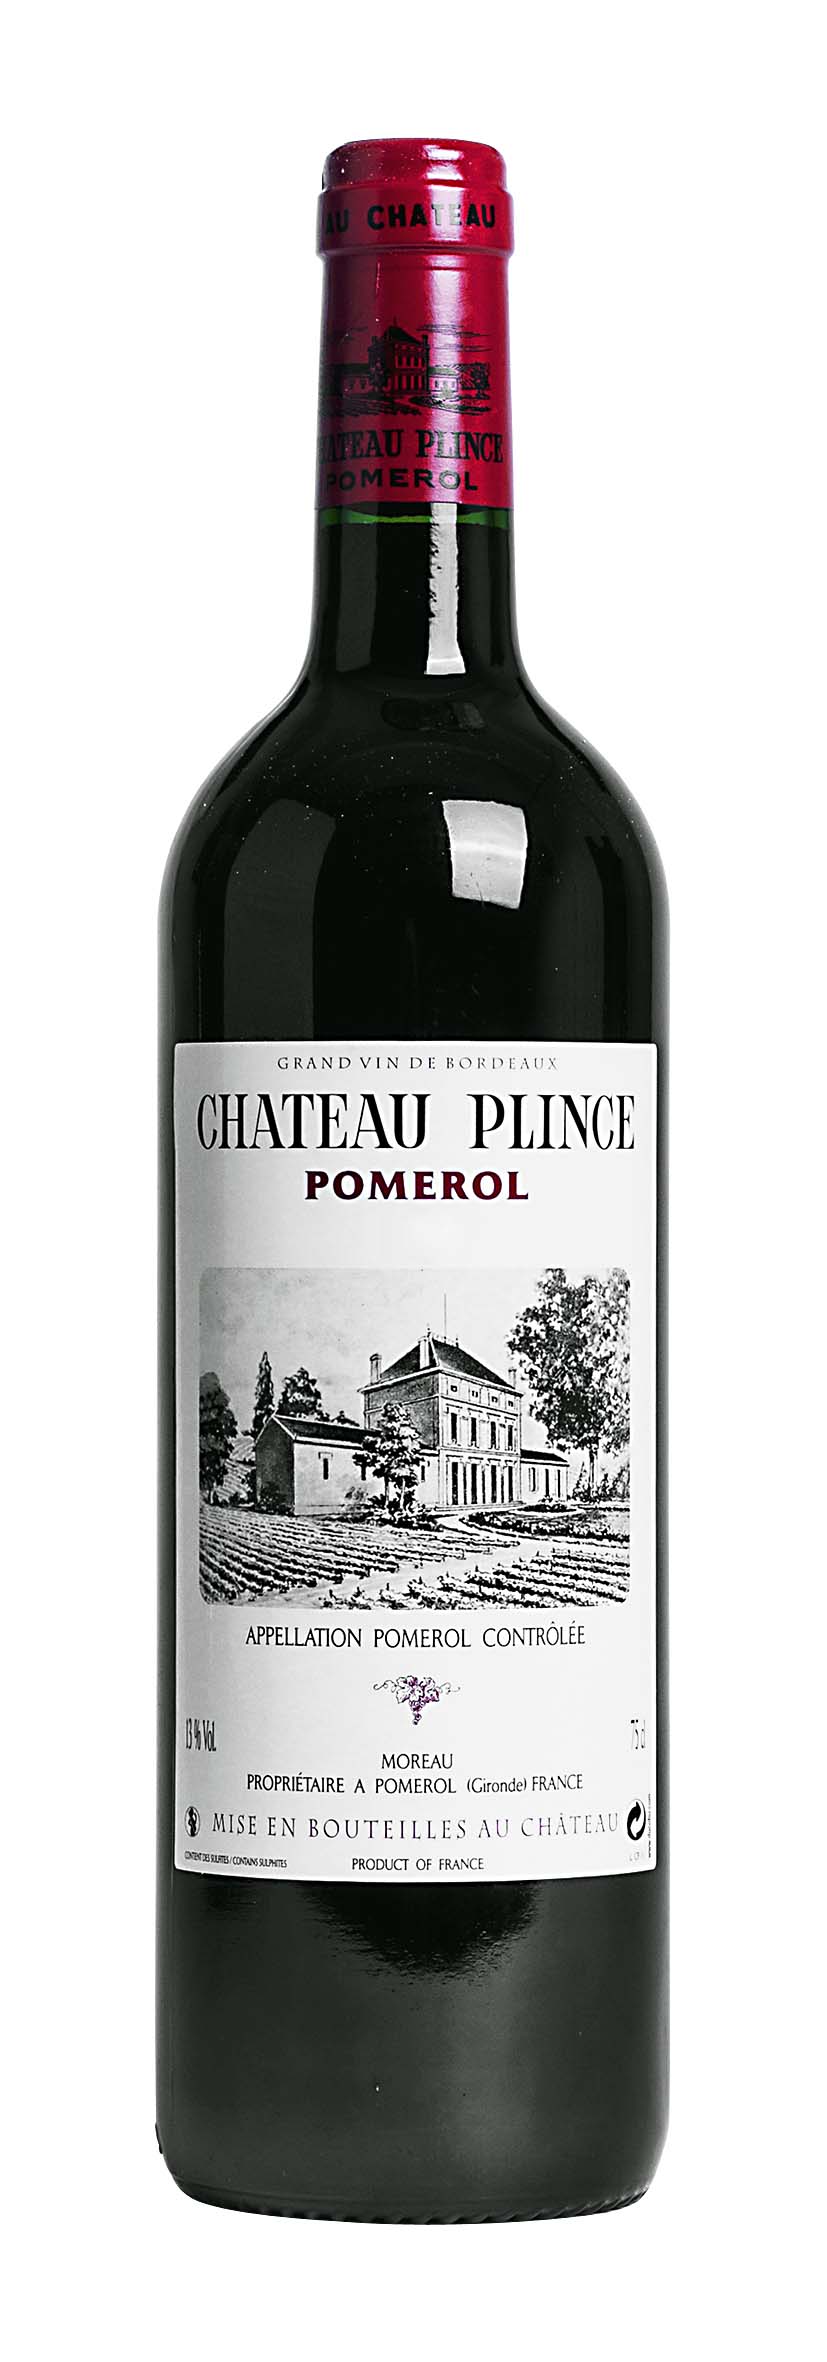 Pomerol AOC Château Plince 2011